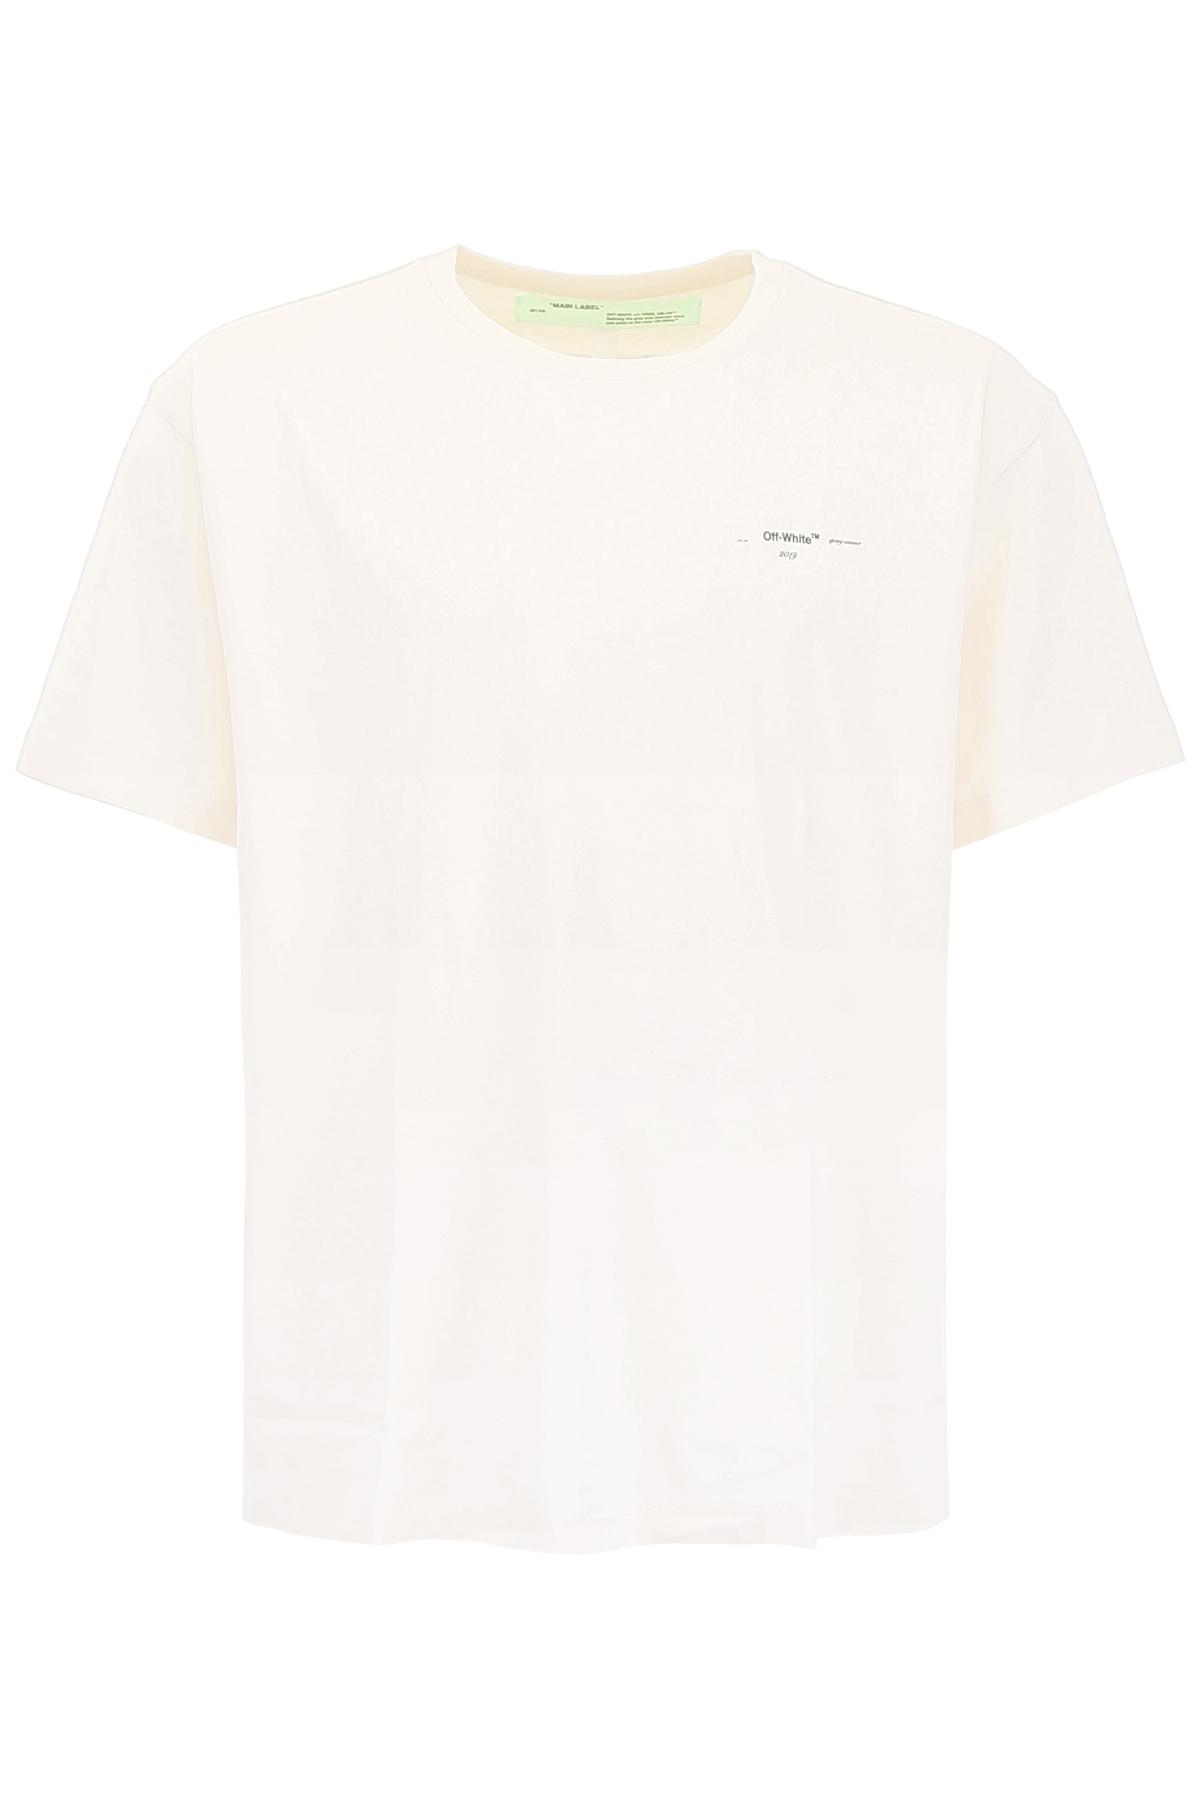 Off-White c/o Virgil Abloh 2019 Crew Neck T-Shirt - Orange T-Shirts,  Clothing - WOWVA54380